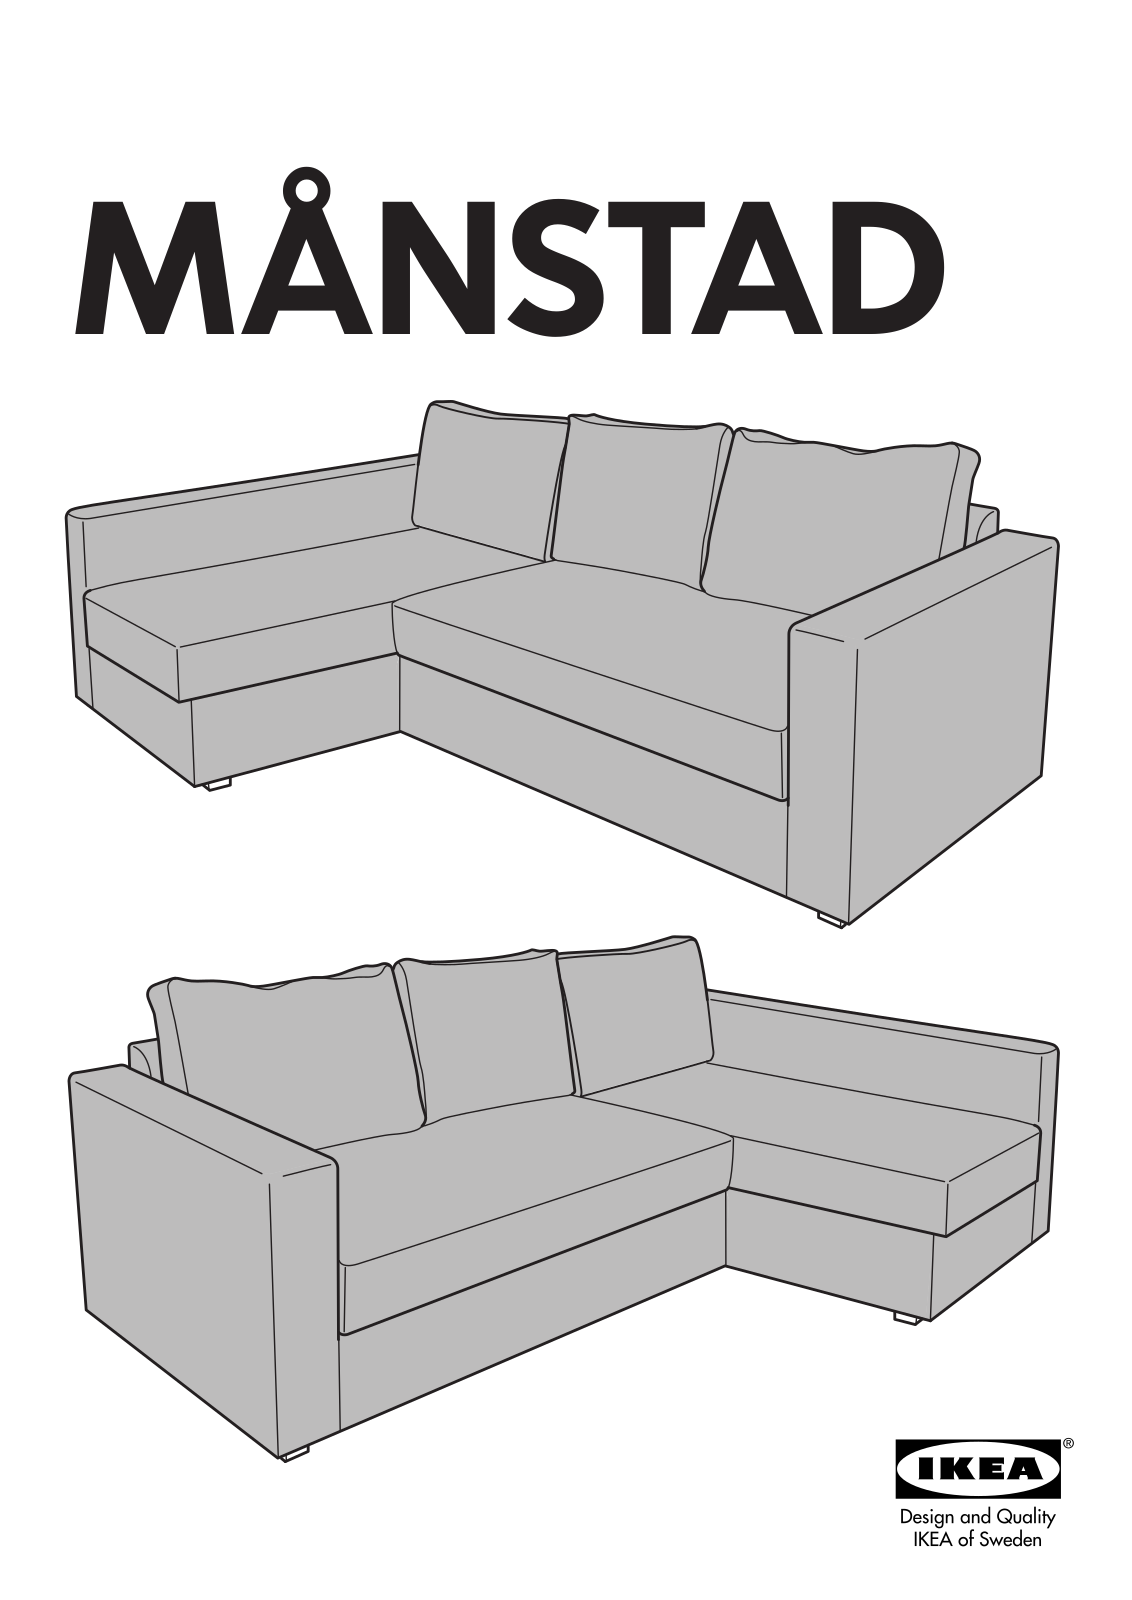 IKEA MANSTAD User Manual